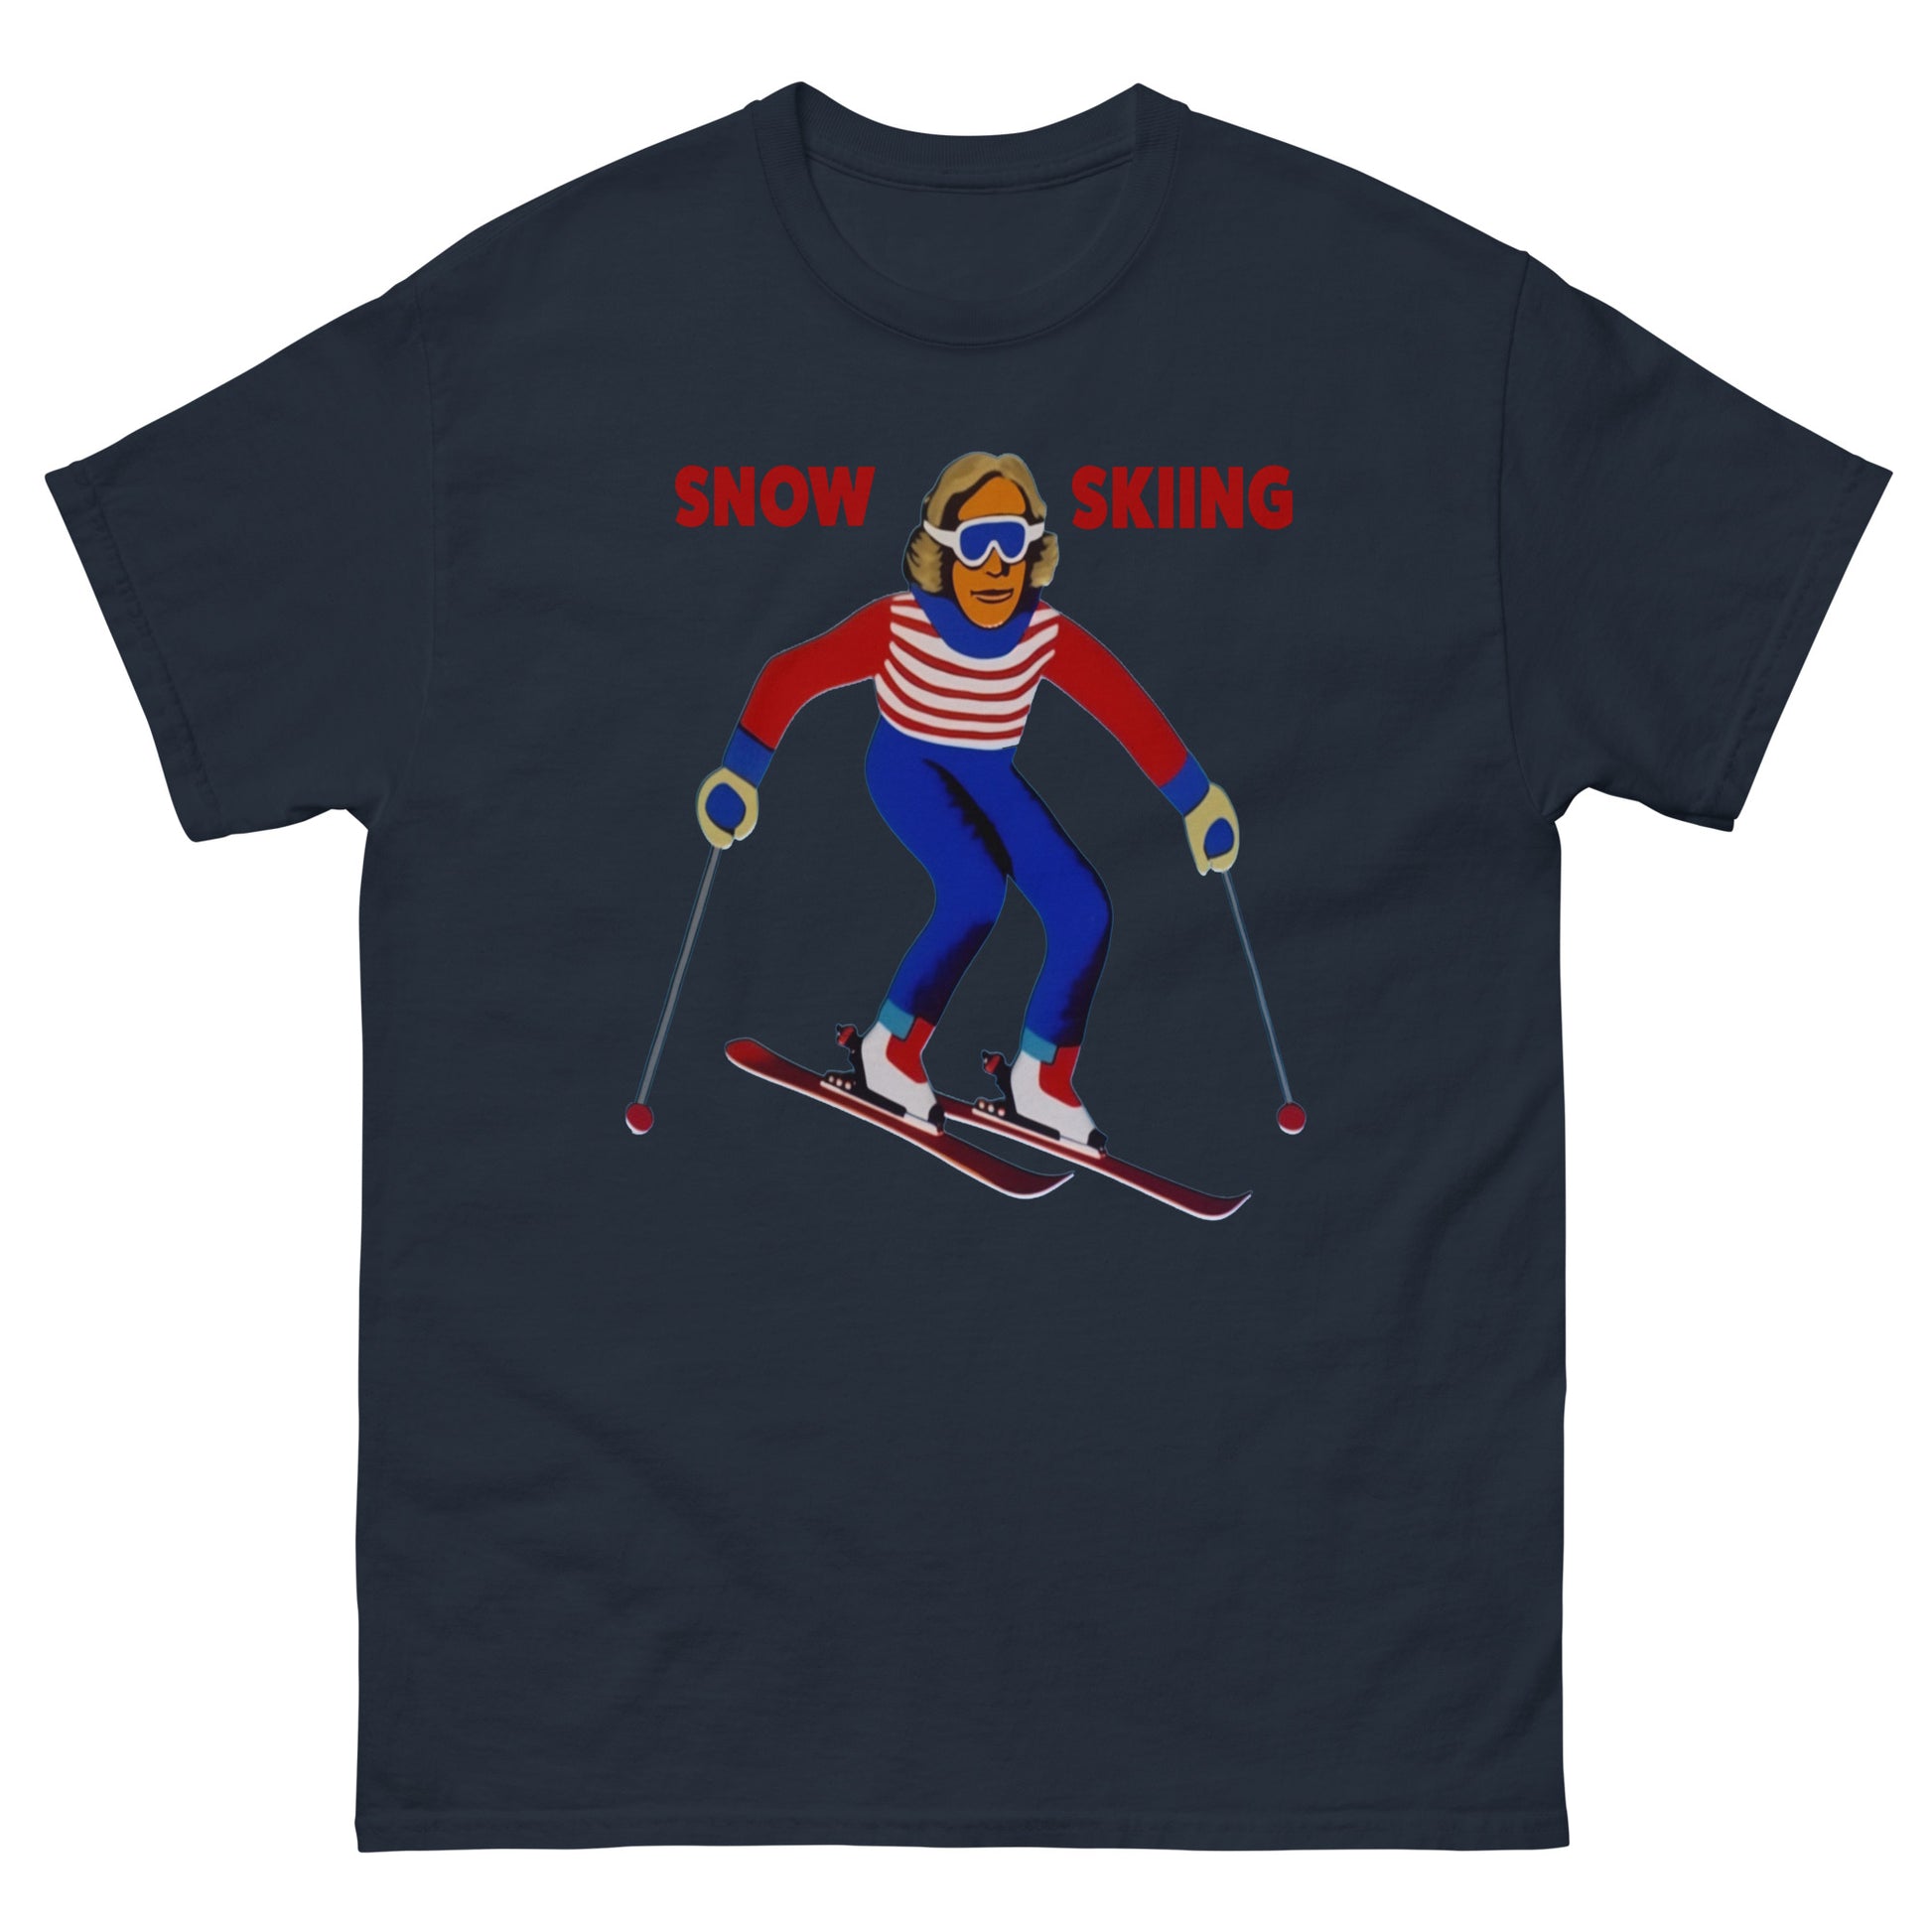 Snow Skiing printed t-shirt by Whistler Shirts